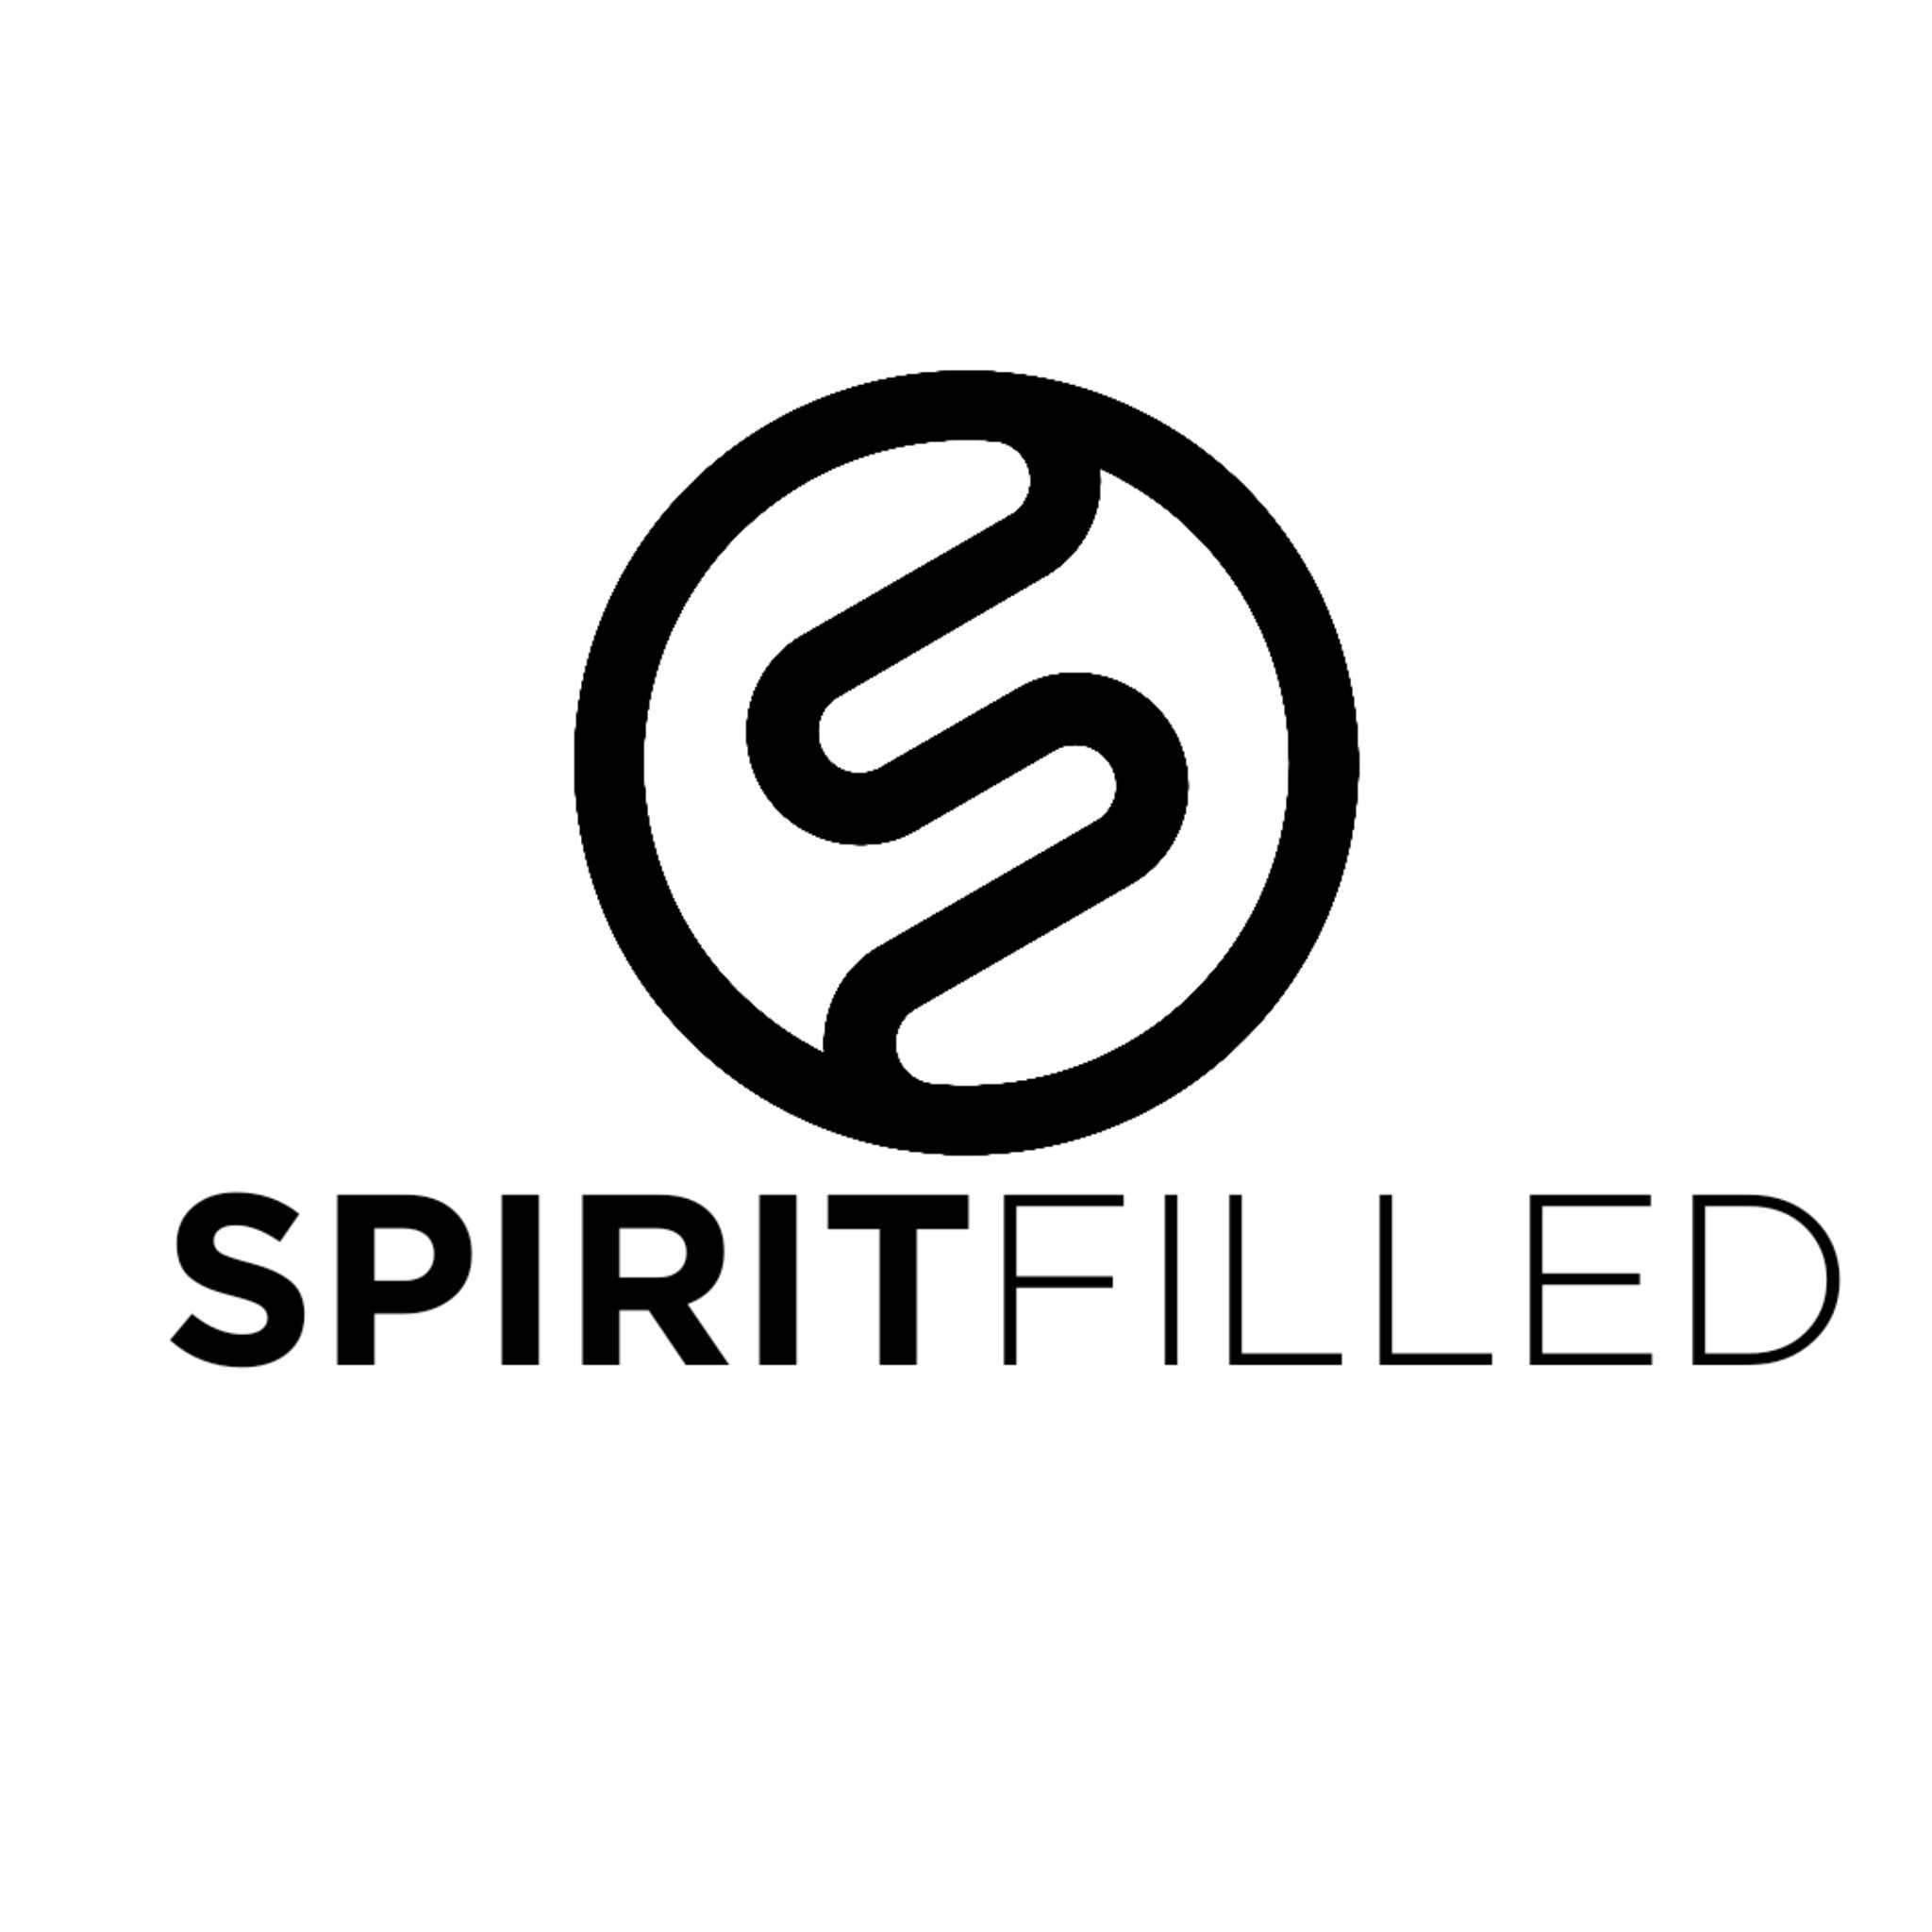 Spiritfilled Ltd